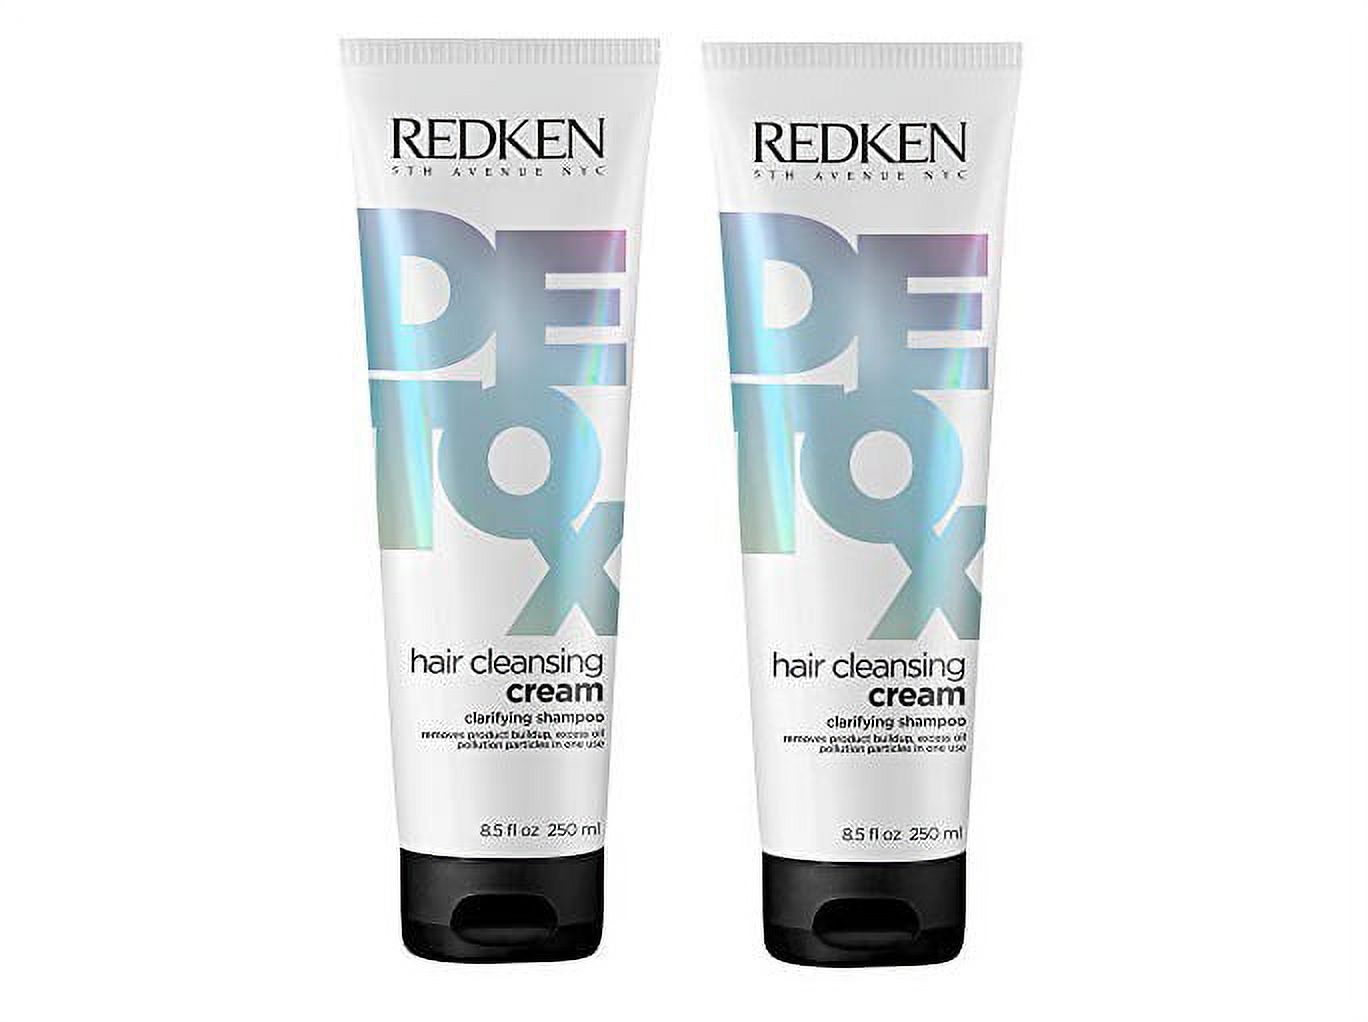 Redken Detox Hair Cleansing Cream Clarifying Shampoo 8.5 Oz - 2 Pack - image 1 of 2